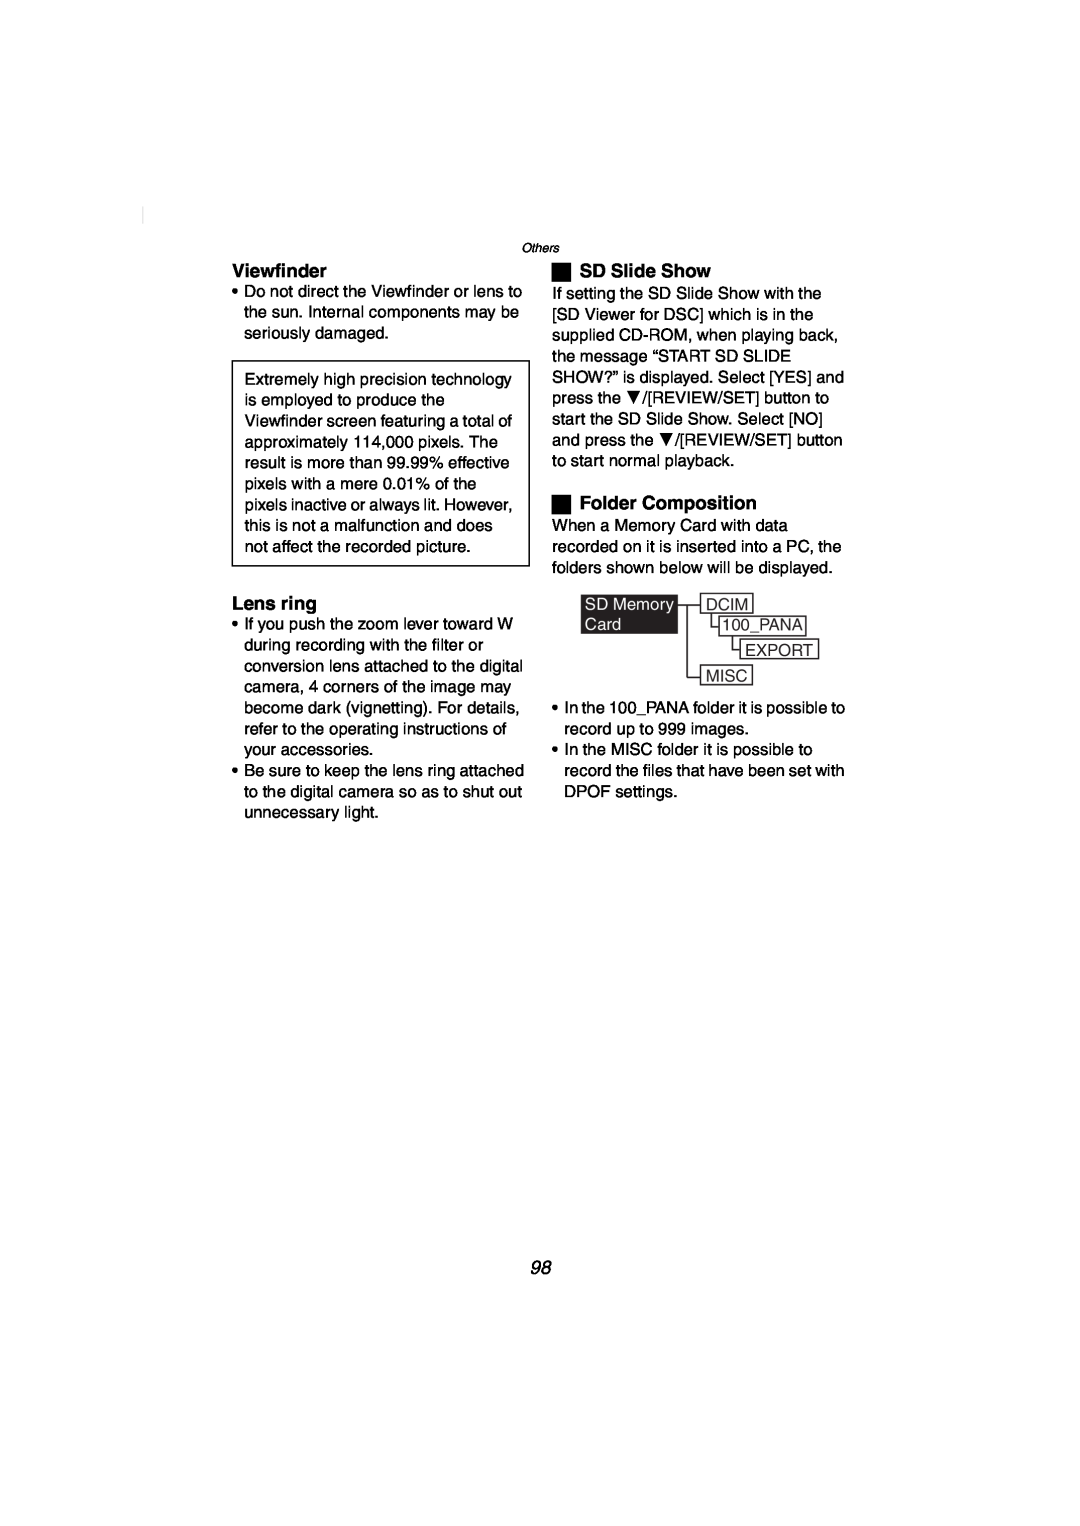 Panasonic DMC-FZ2PP operating instructions Viewfinder, ª SD Slide Show, Lens ring, ª Folder Composition, SD Memory DCIM 